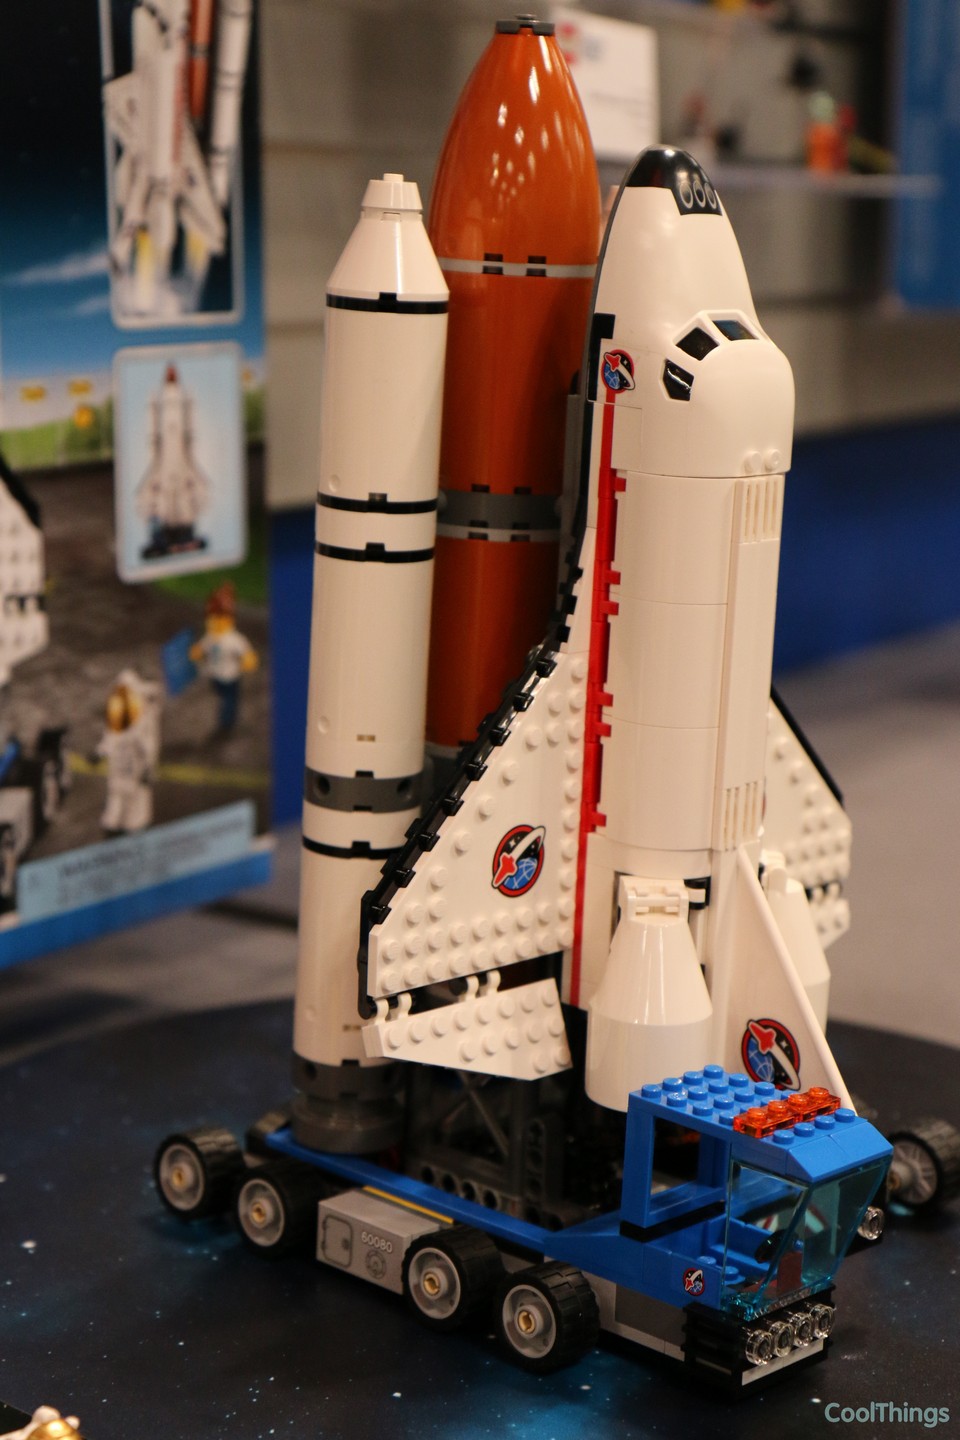 lego spaceport 60080